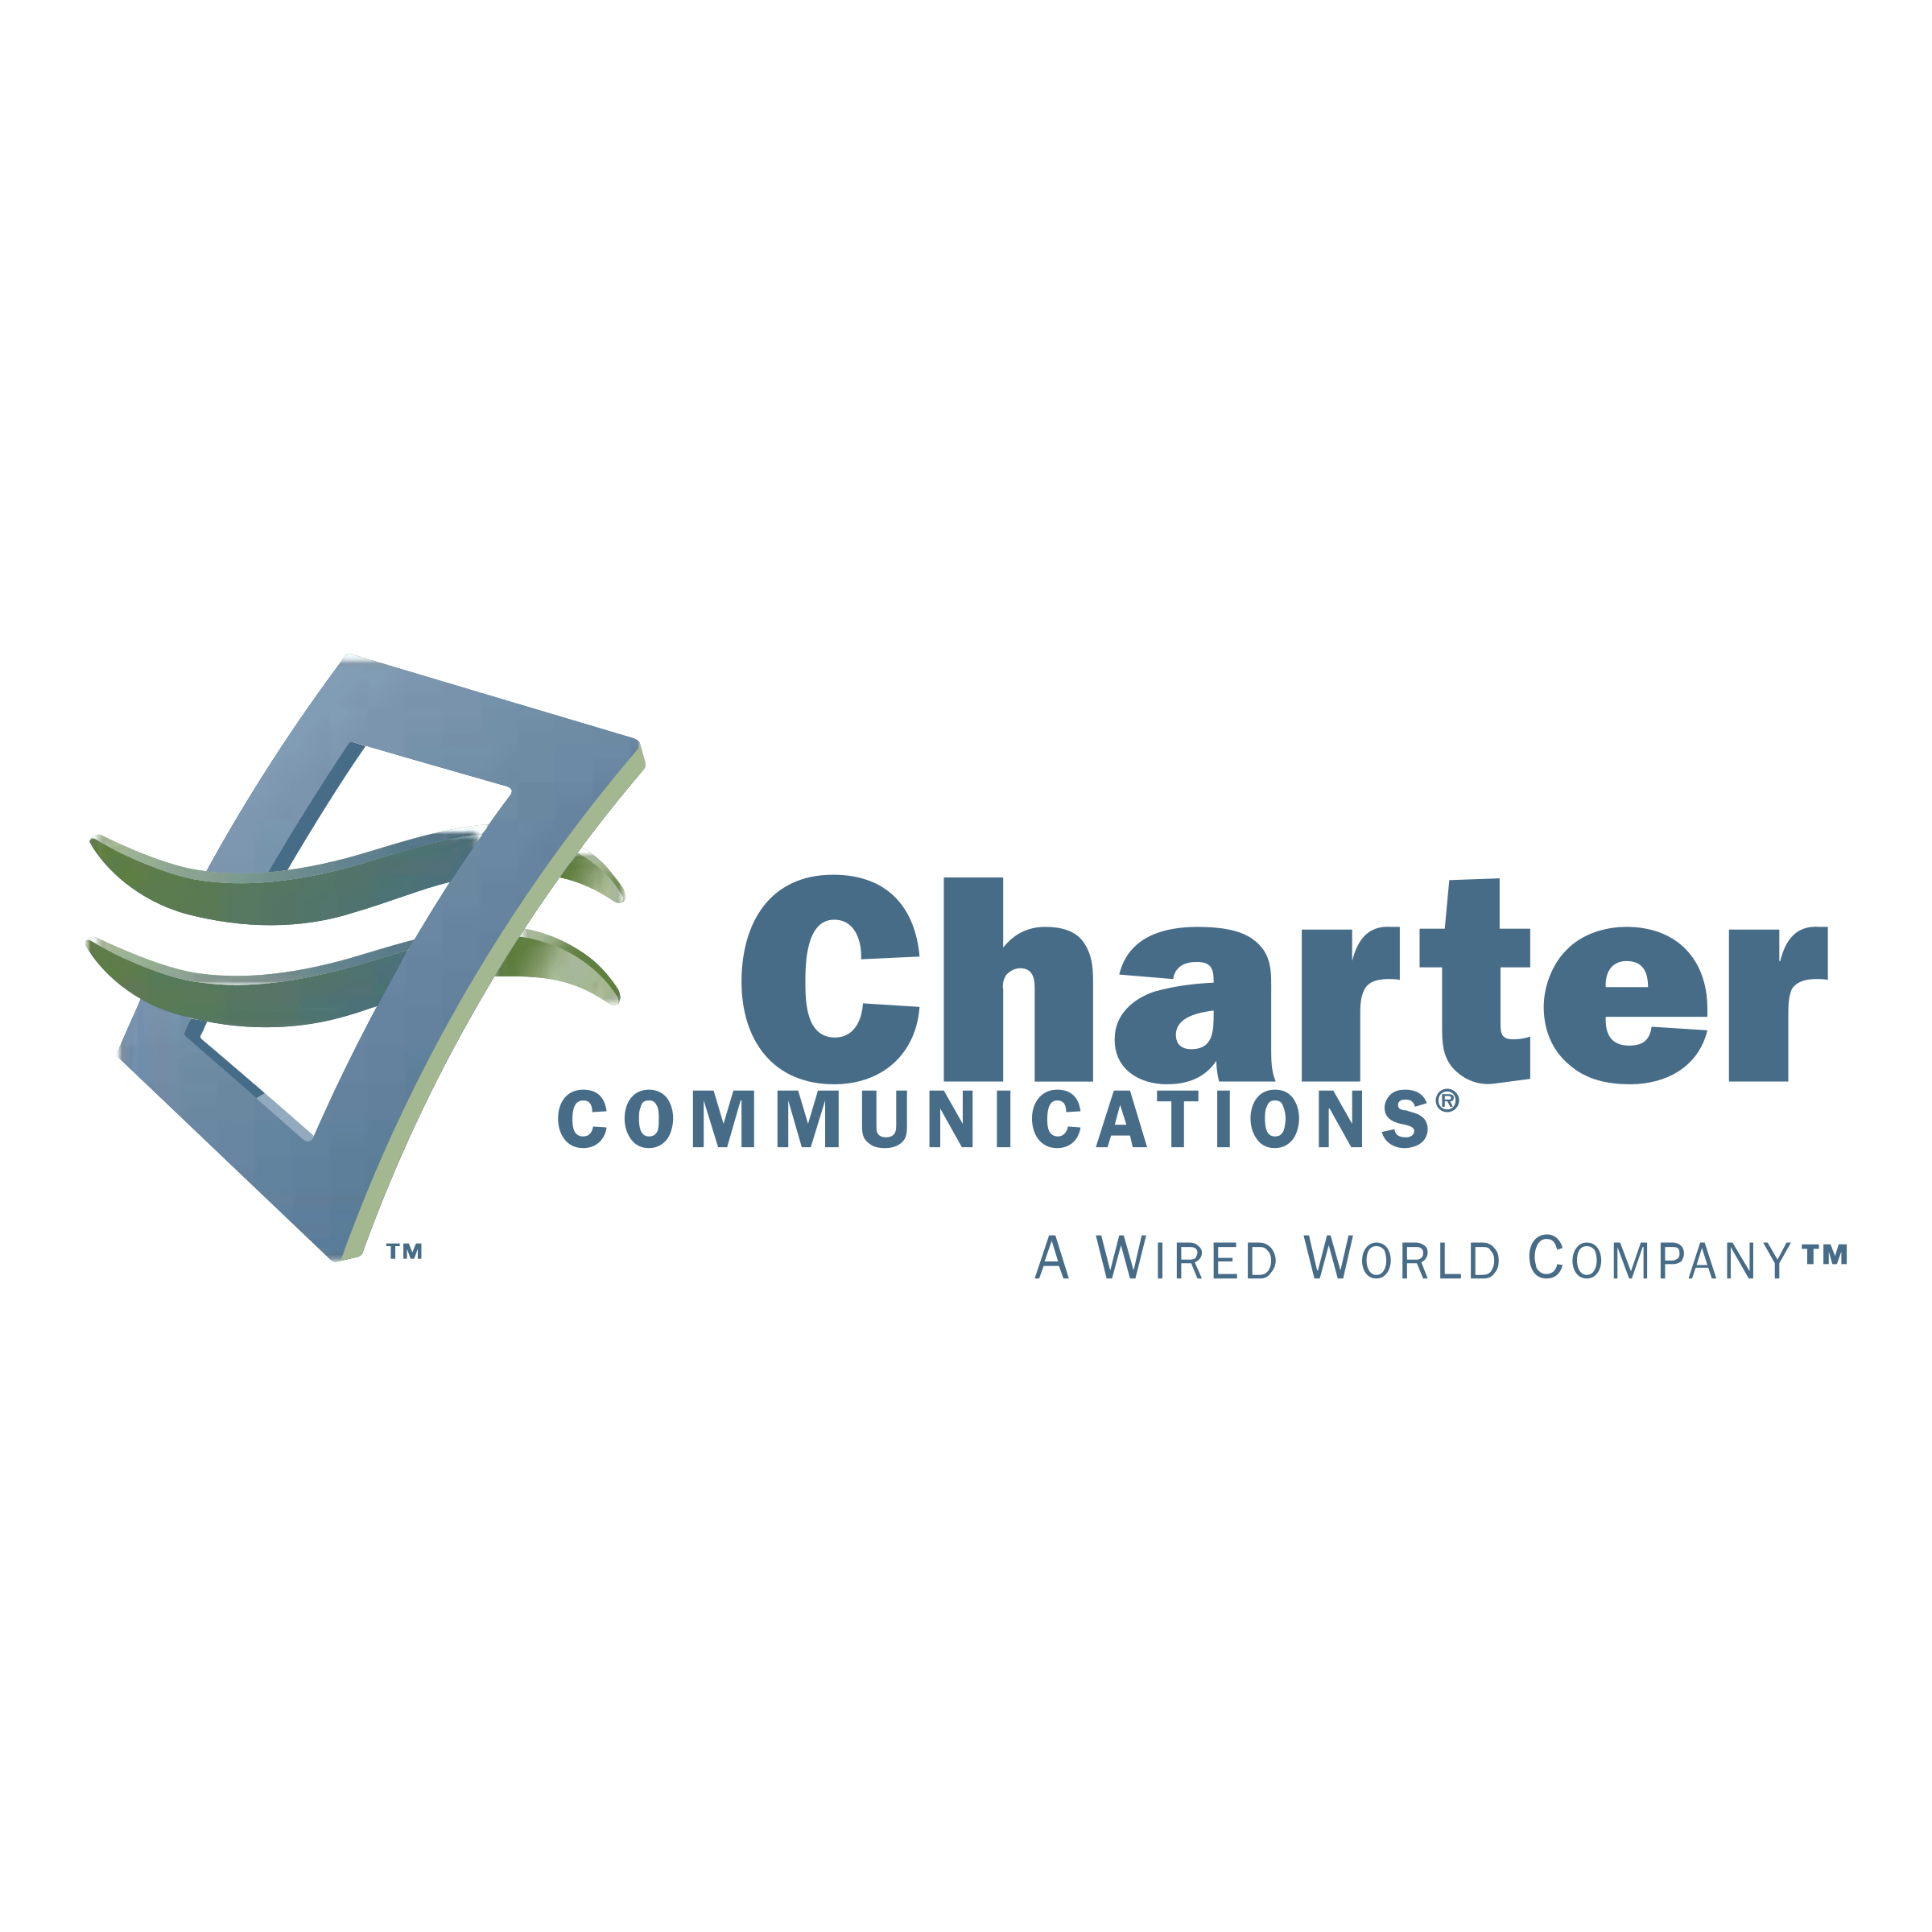 Charter Communications Logo - Charter Communications Logo PNG Transparent & SVG Vector